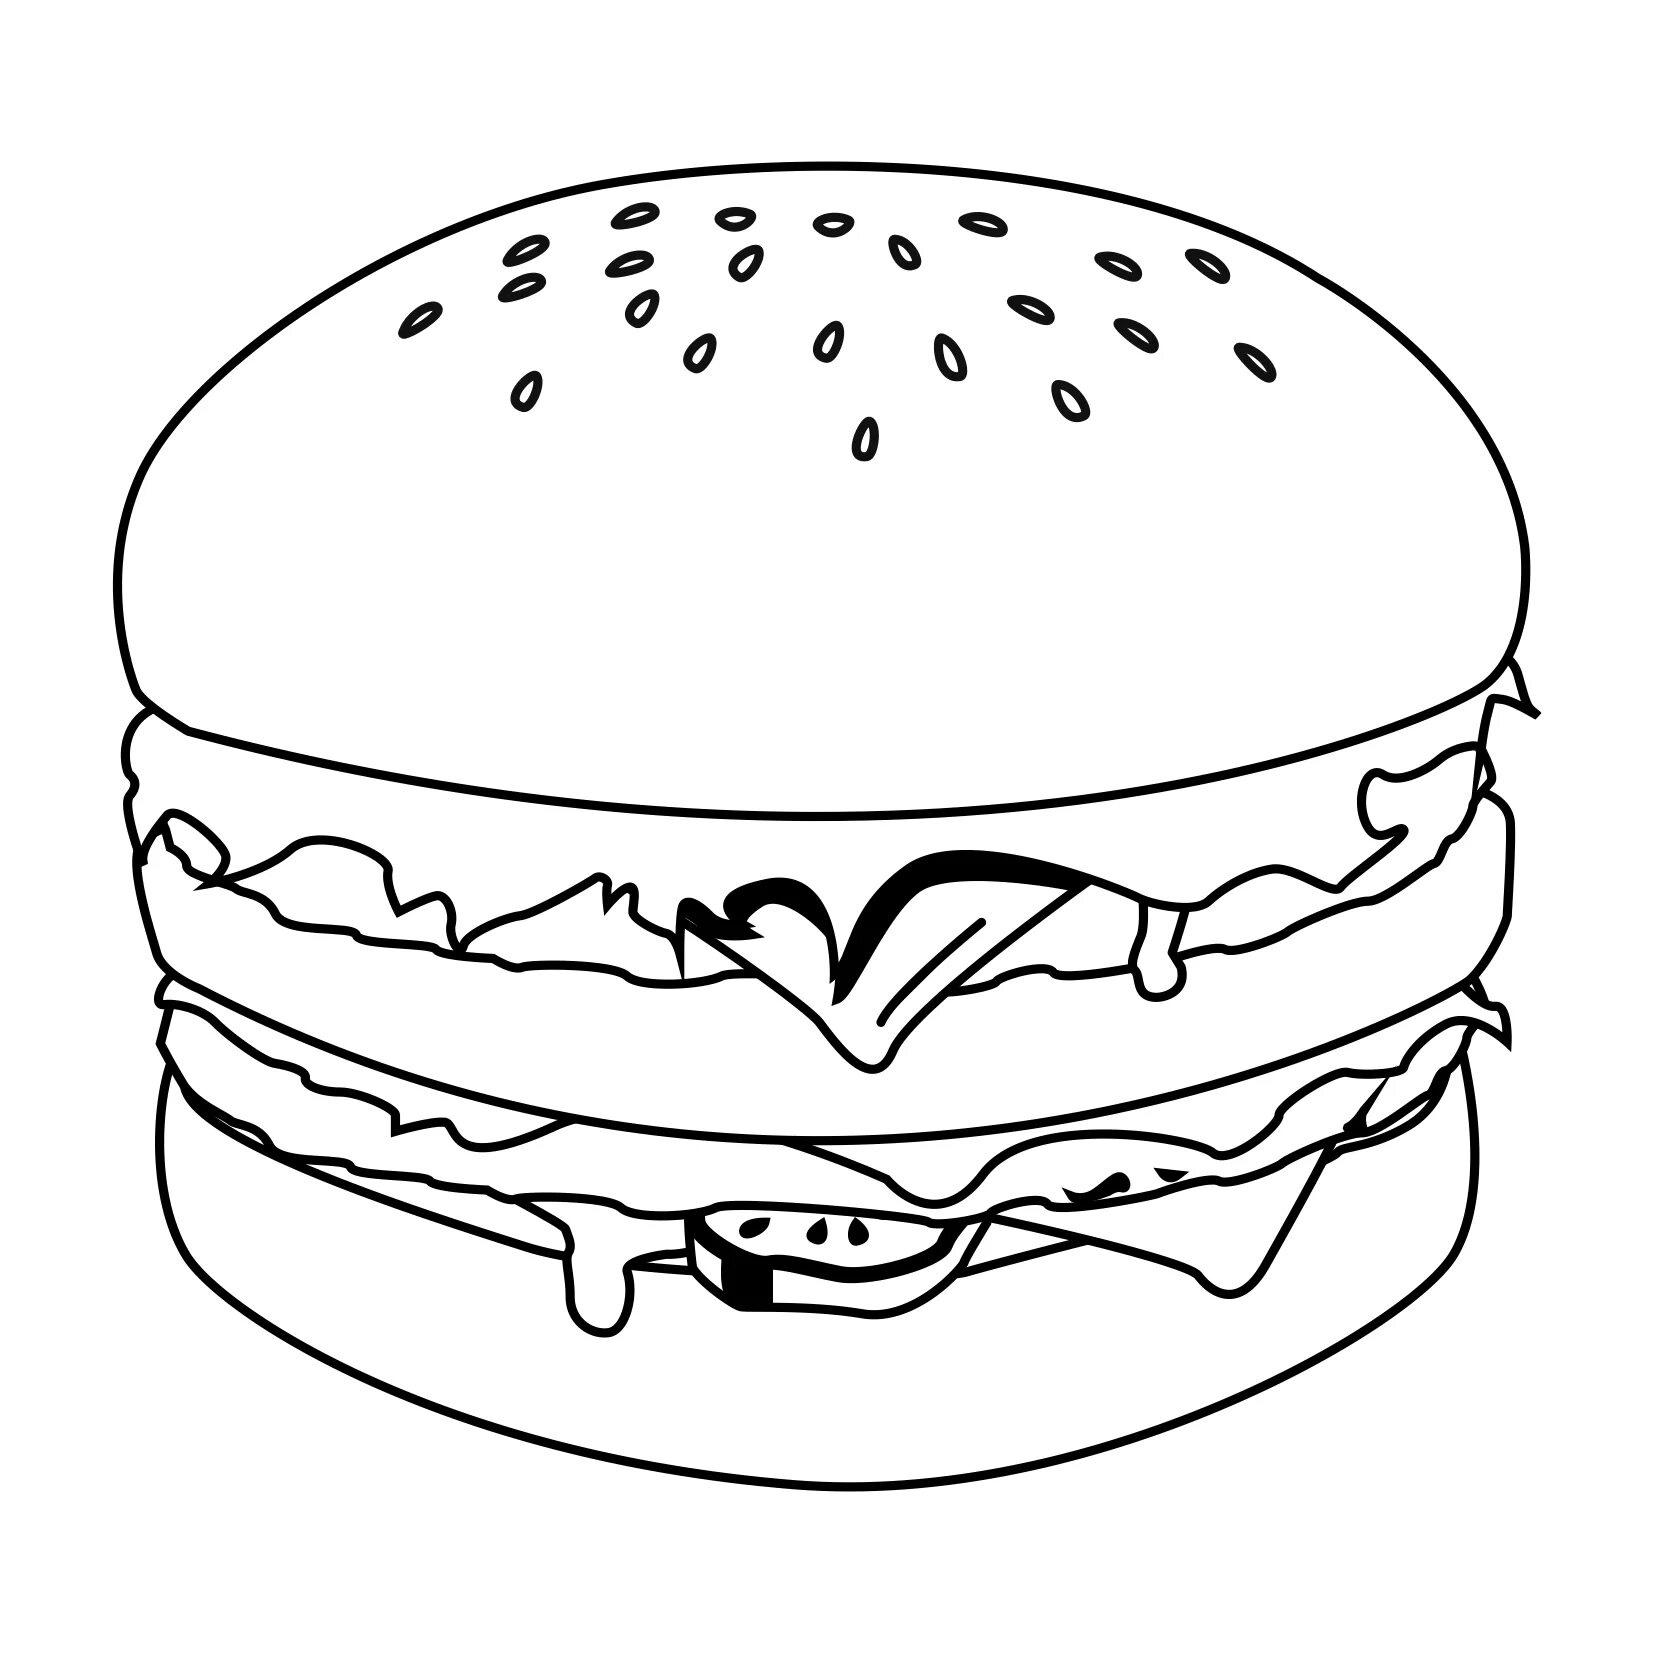 Раскраска радостный чизбургер